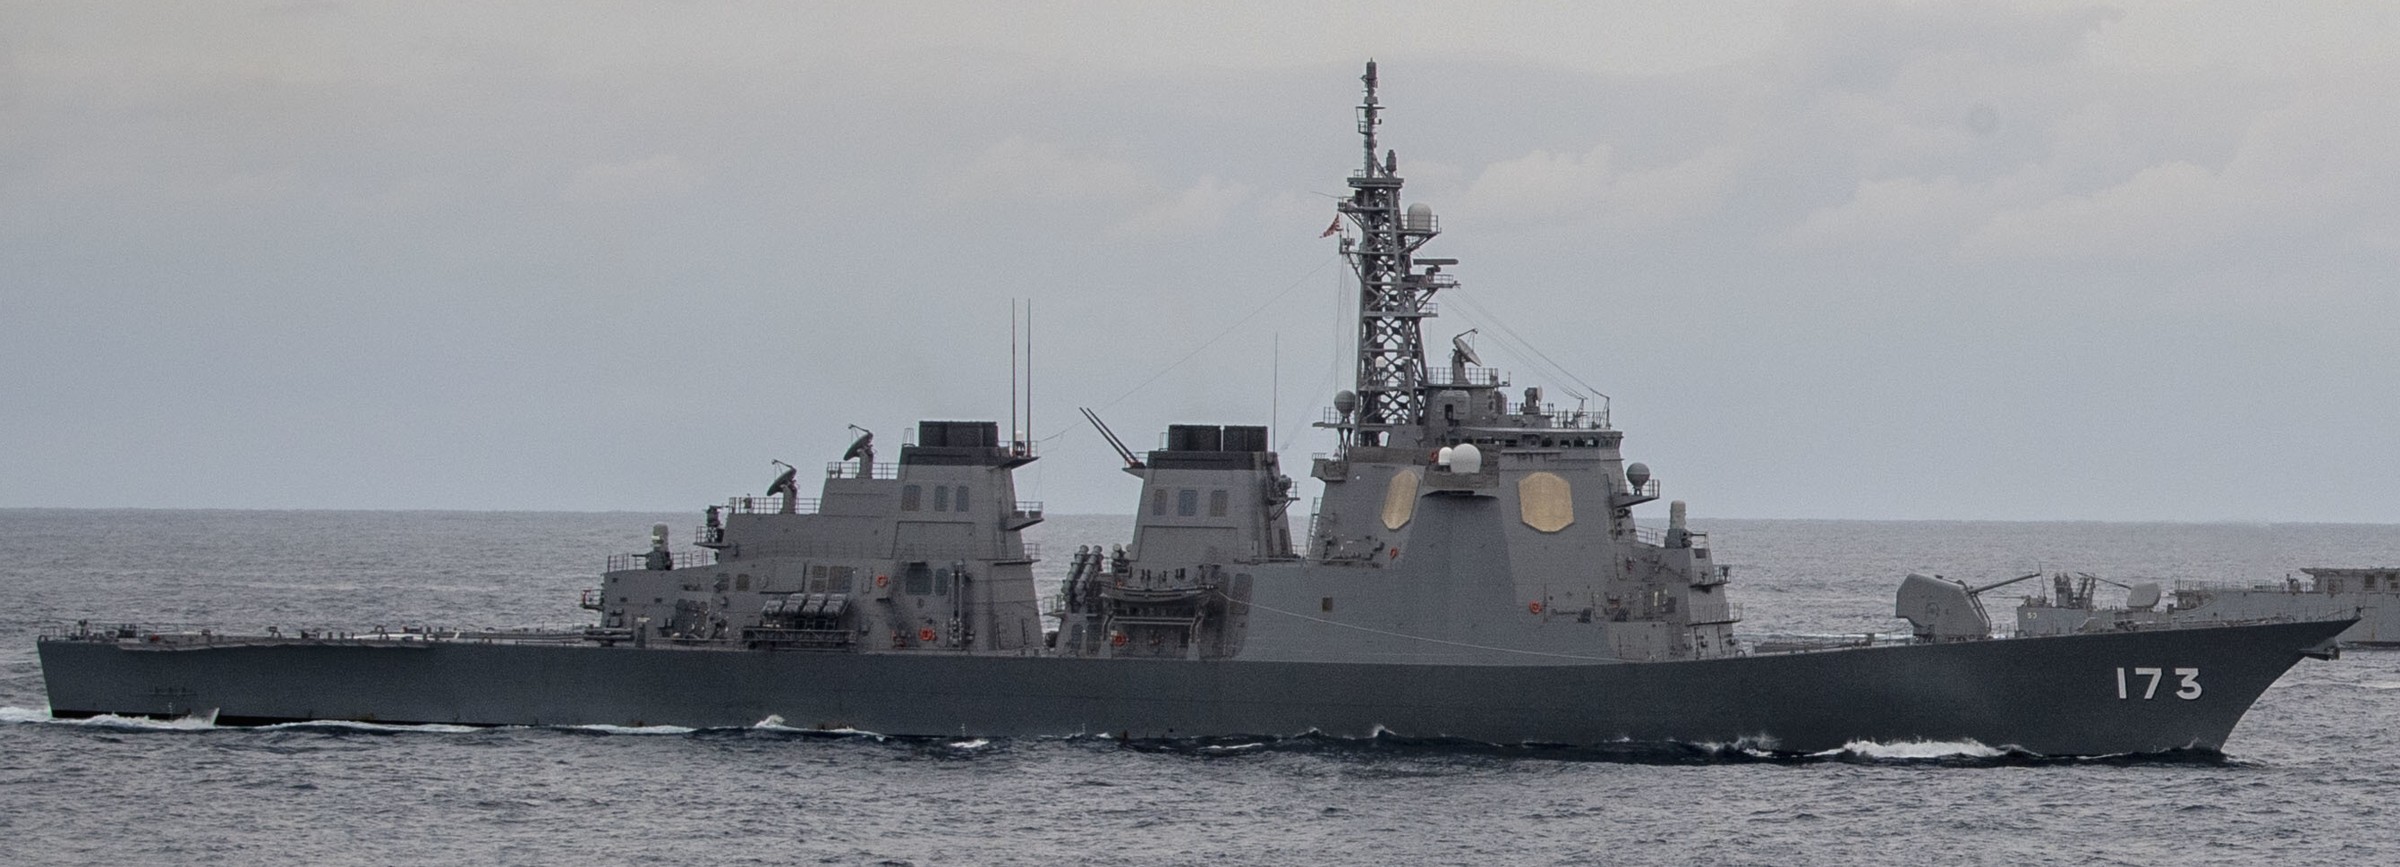 ddg-173 js kongo class guided missile destroyer aegis japan maritime self defense force jmsdf 27